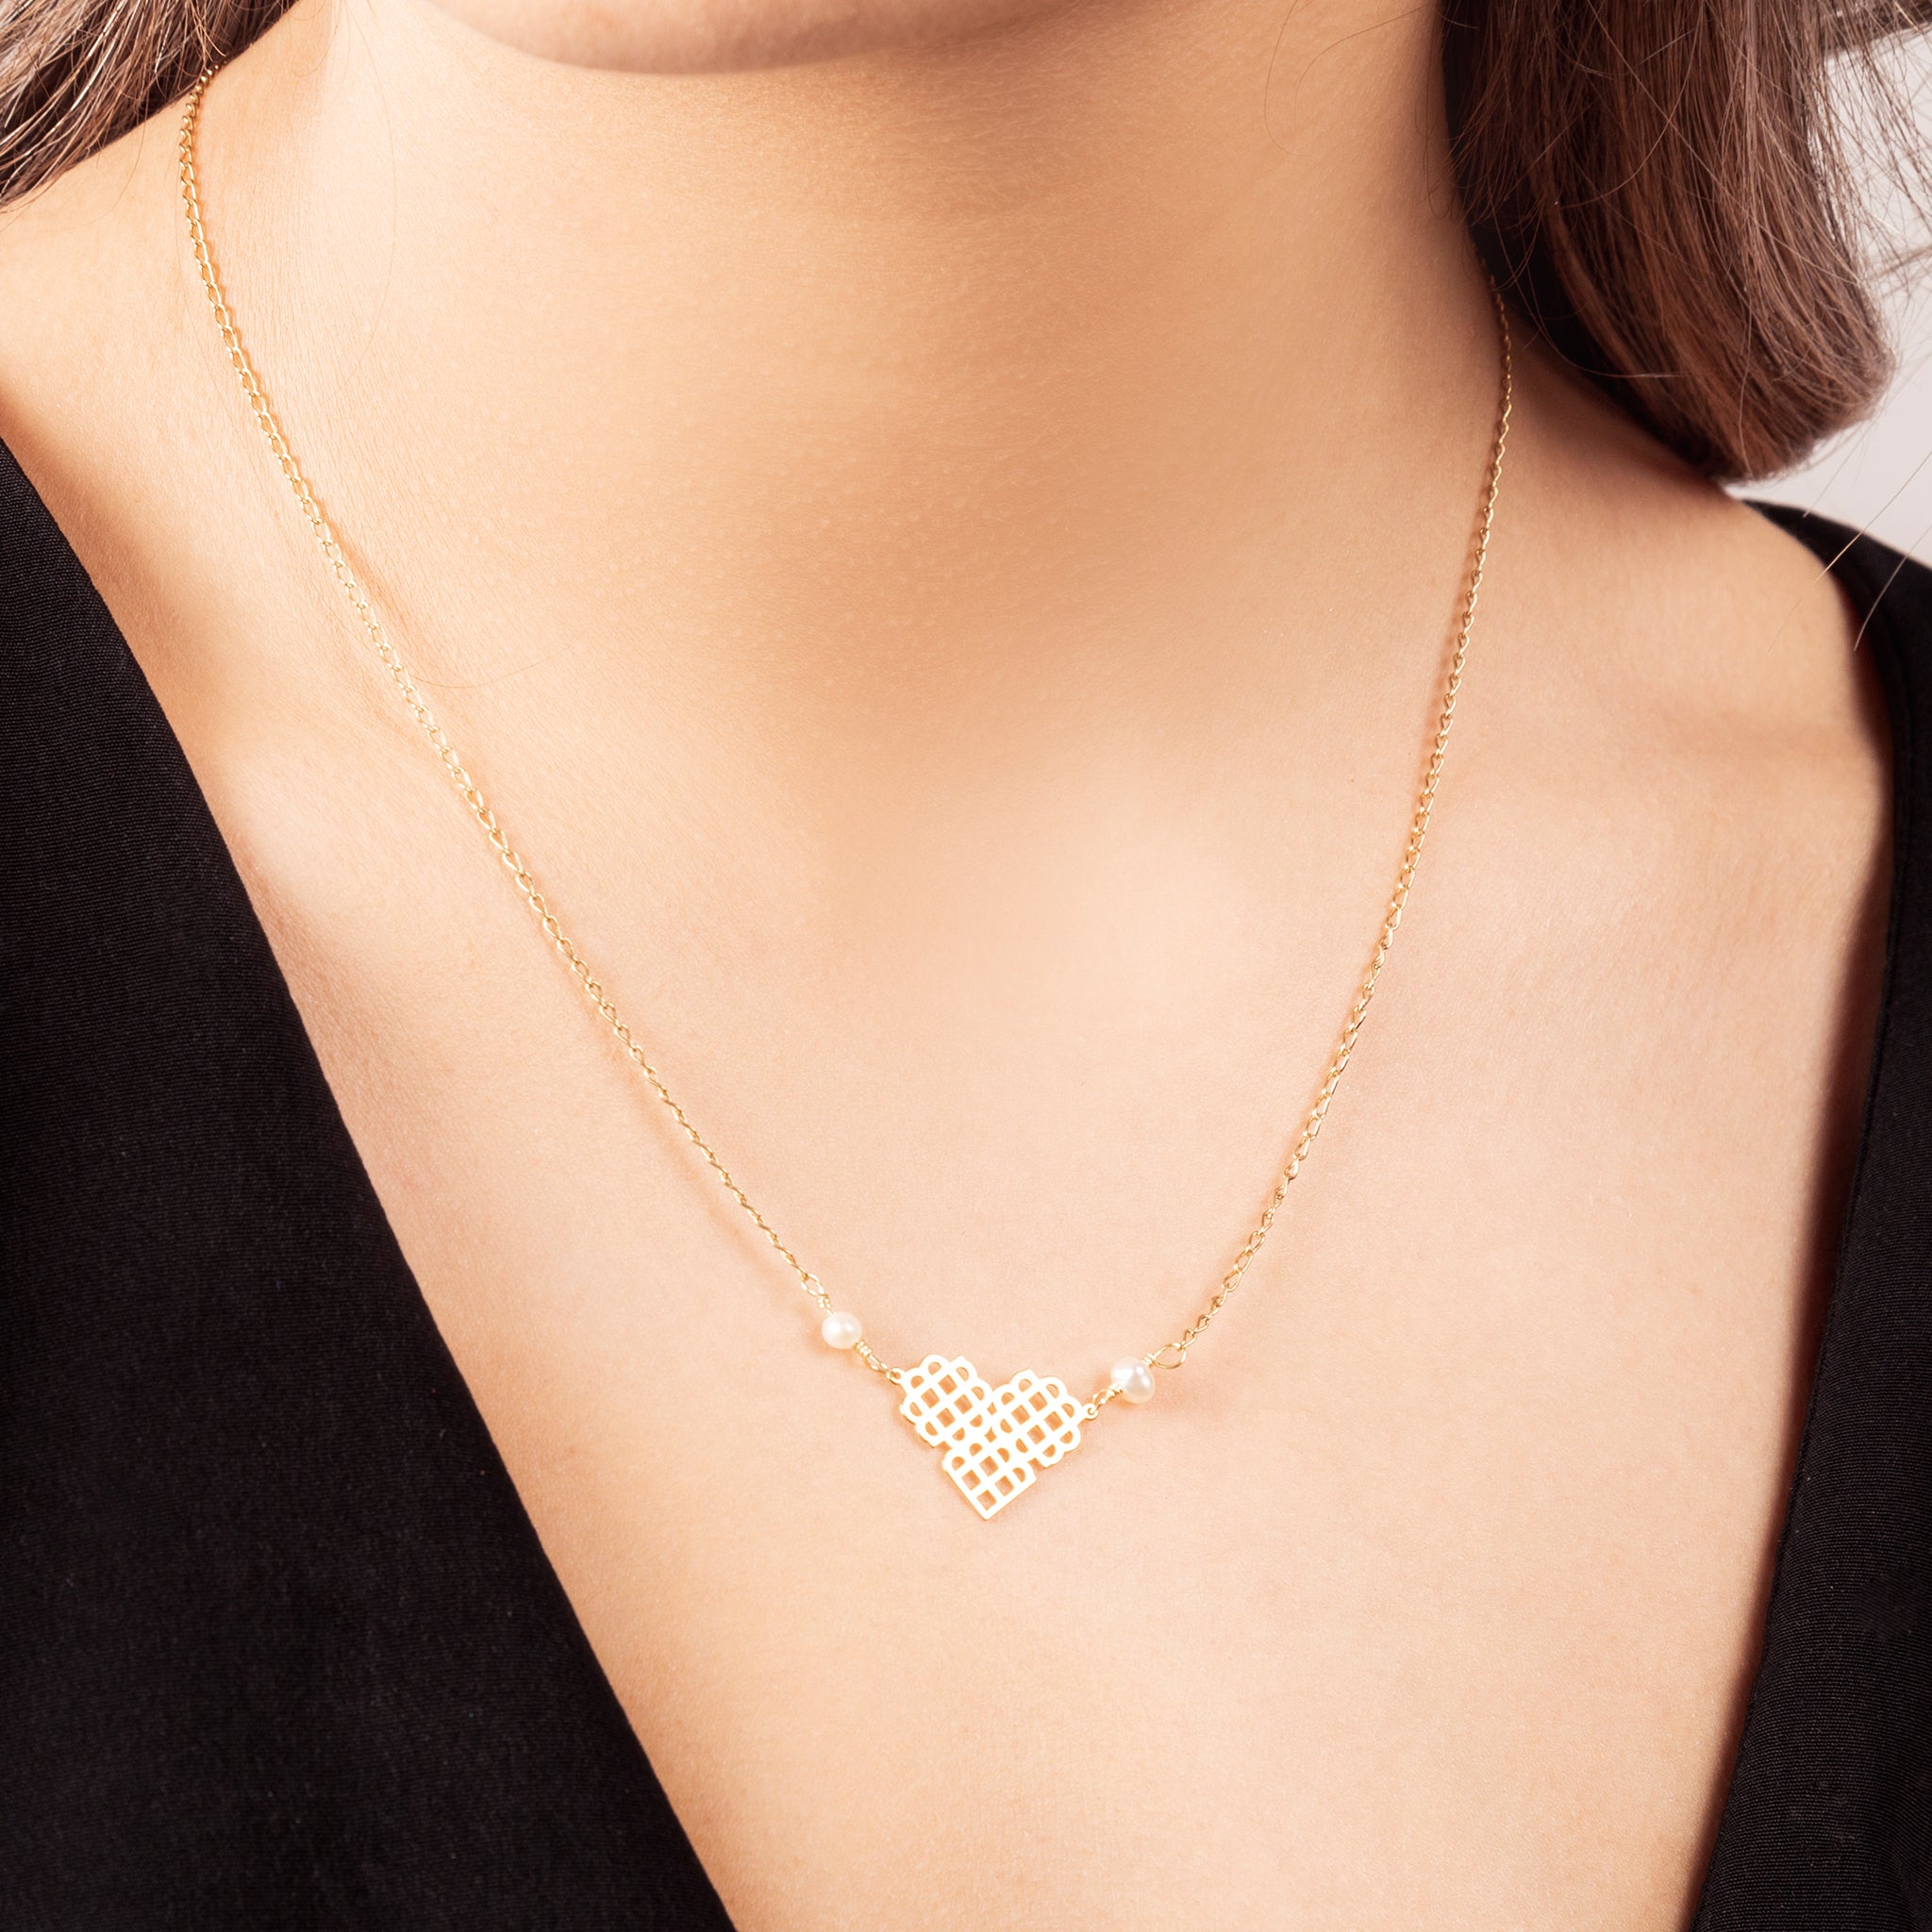 Millié Jewelry - Millié Jewelry - Millié Heart Mini Necklace - Collares - Diseño Mexicano - Hecho en México